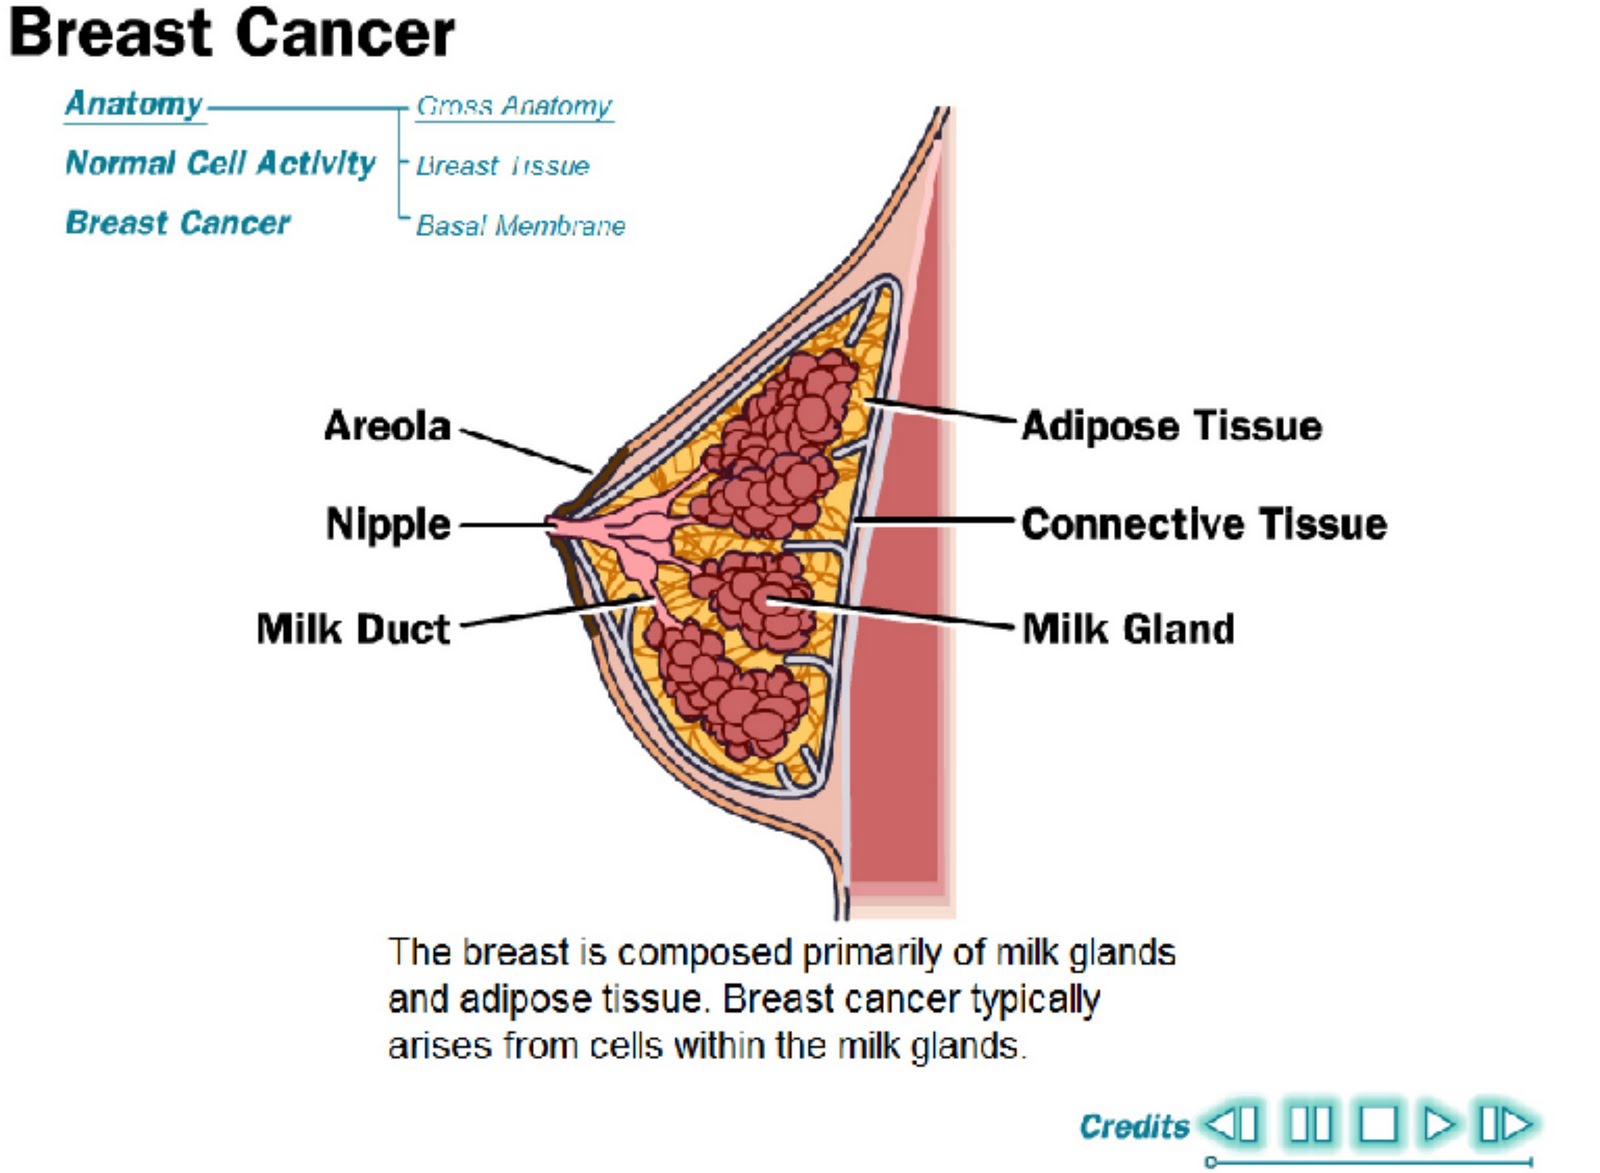 https://blogger.googleusercontent.com/img/b/R29vZ2xl/AVvXsEi8jW4PvIpu-QN2zEKh8o7dGZ95X1JPtijiqrsJDY0aokmpwk2CyNpfaG5lHAKvgOqlrzgZ0VldQrrD6r05Ki0ooF1JjswdO9ZxyyAWgIZoqiBRYWqTc7_IlfGFnMIN8GMgVn3diISxg-wG/s1600/breastcancer.jpg